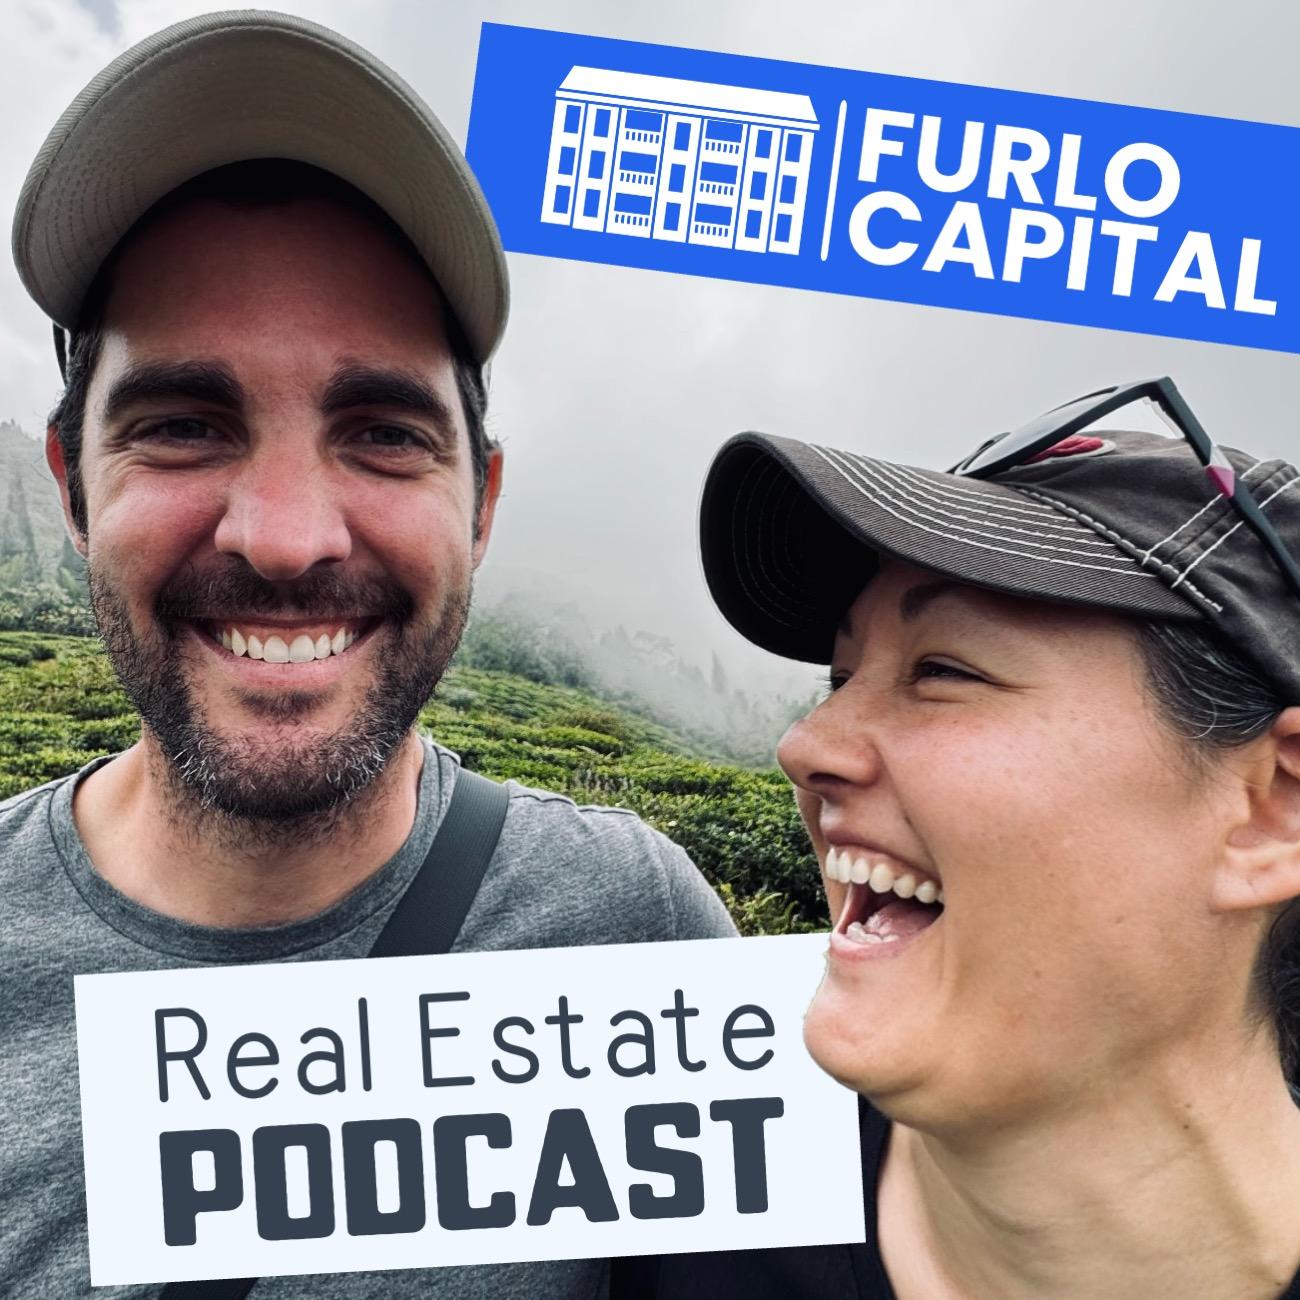 Furlo Capital Podcast